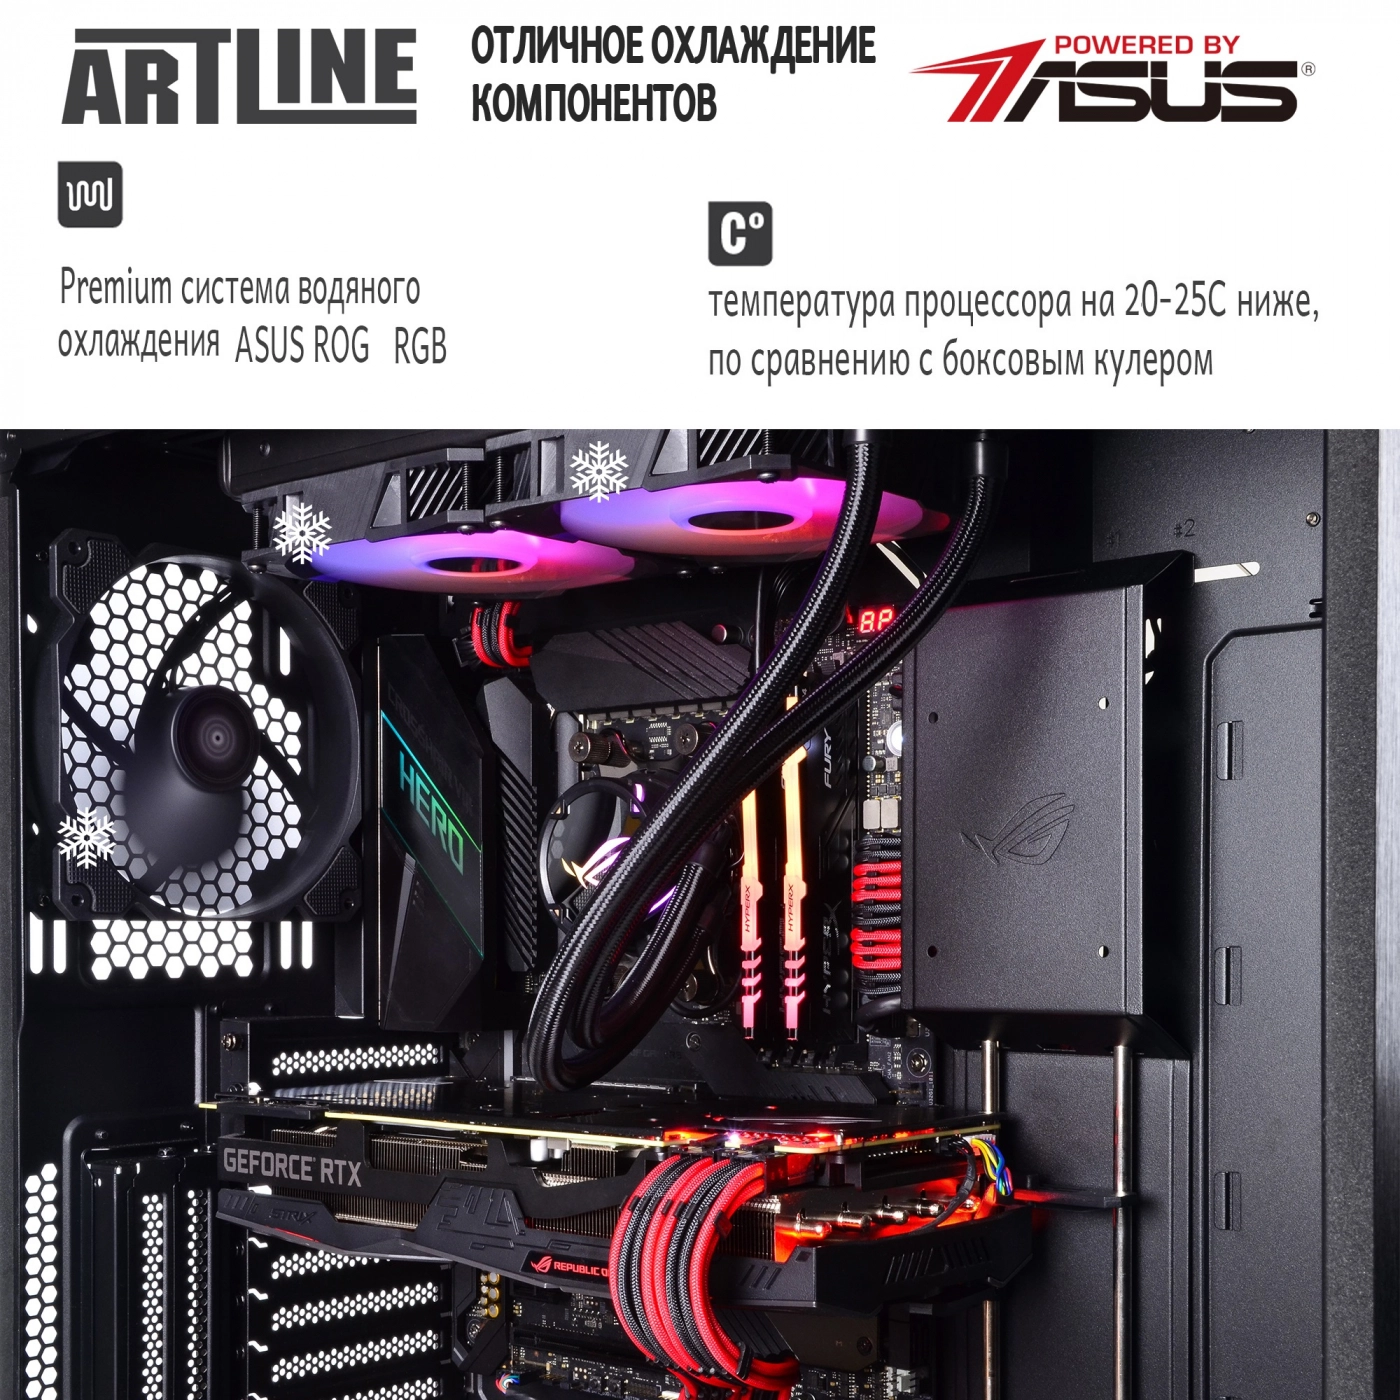 Купить Компьютер ARTLINE Gaming STRIXv41 - фото 8